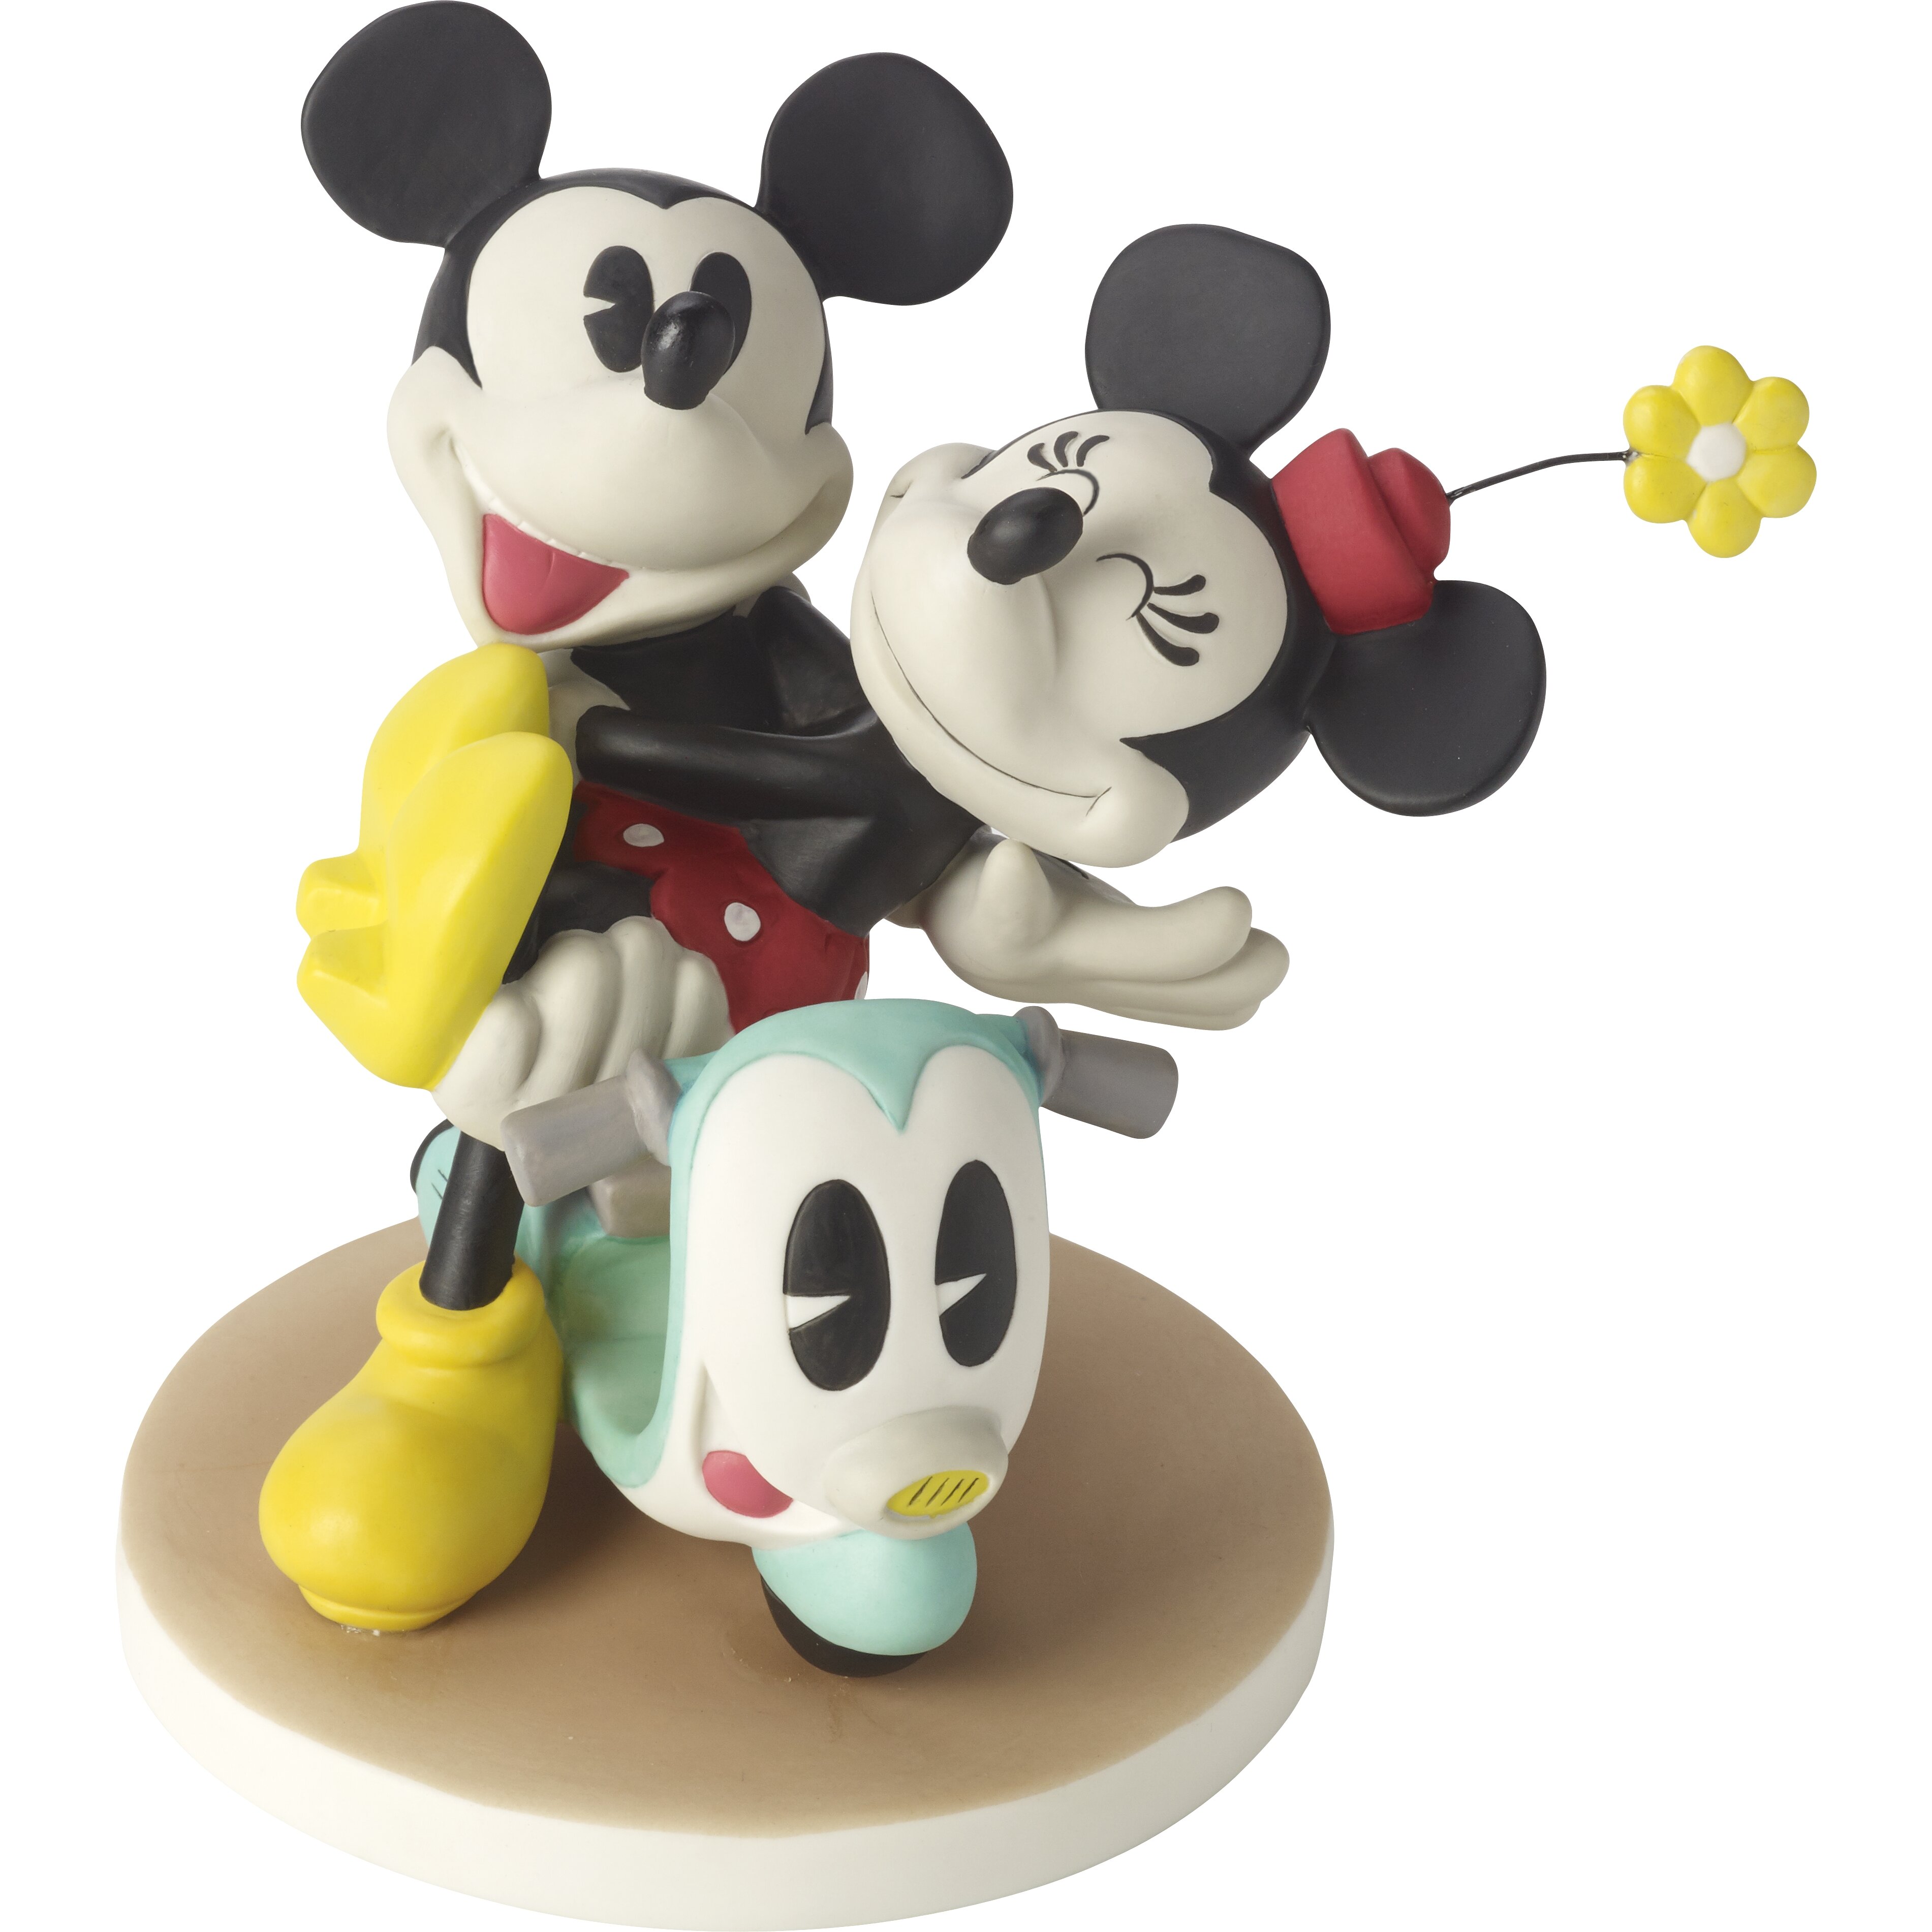 Precious Moments Disney Dreamer Boy Mickey Mouse Figurine Bisque Porcelain